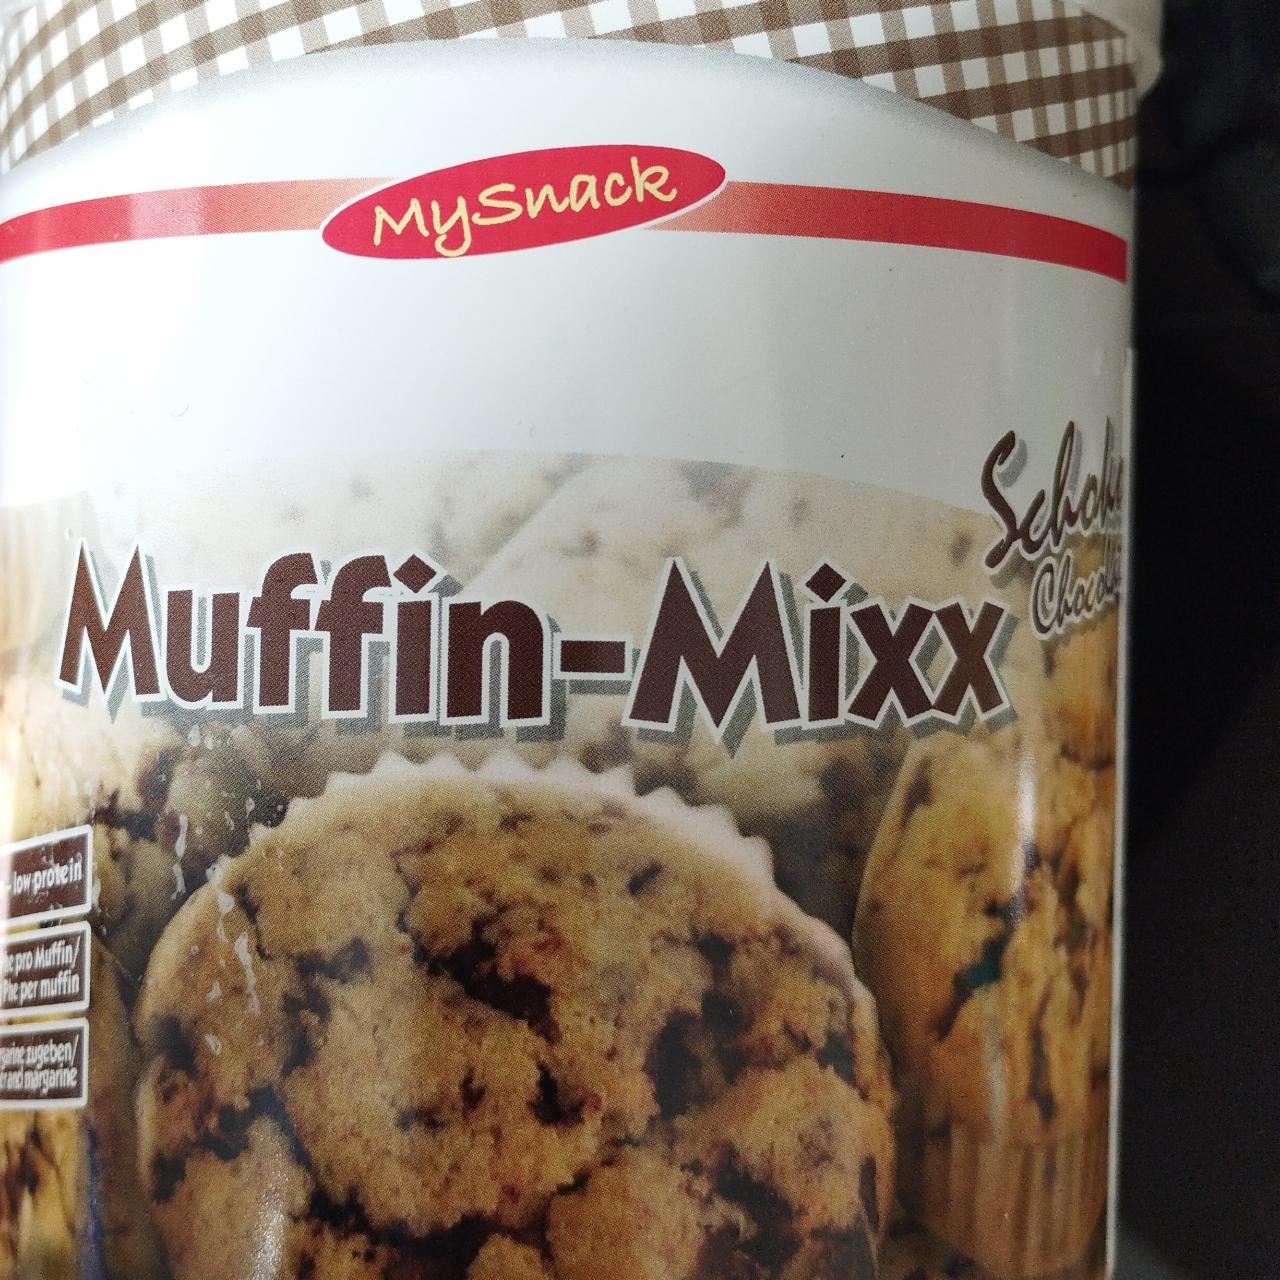 Fotografie - Muffin mixx schoko chocolate My snack